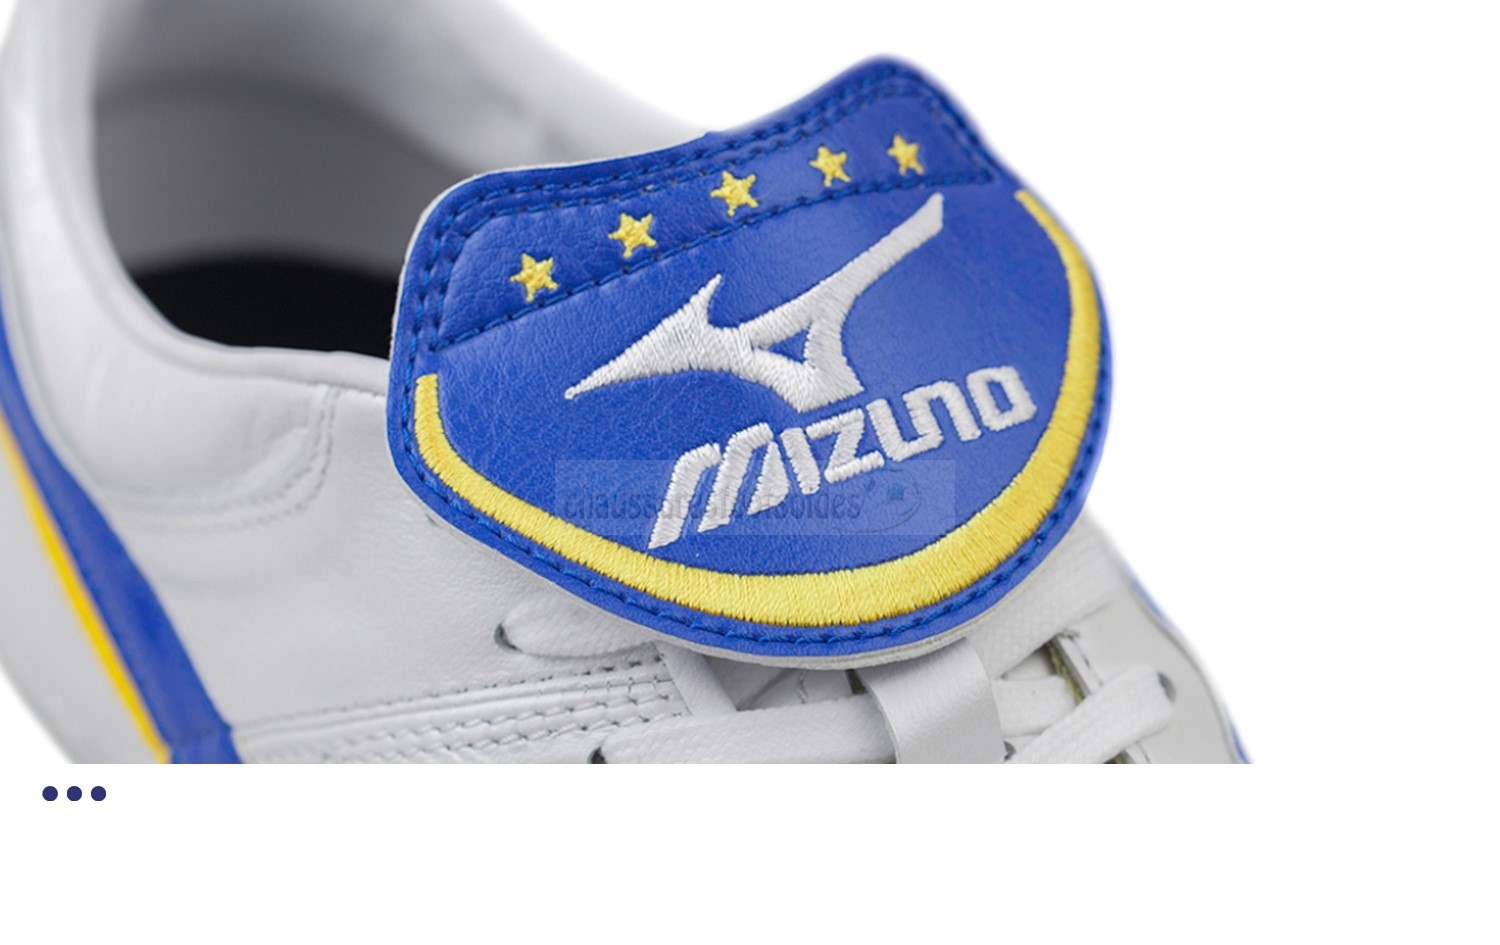 Mizuno Crampon De Foot Wave Cup Legend FG Blanc Bleu